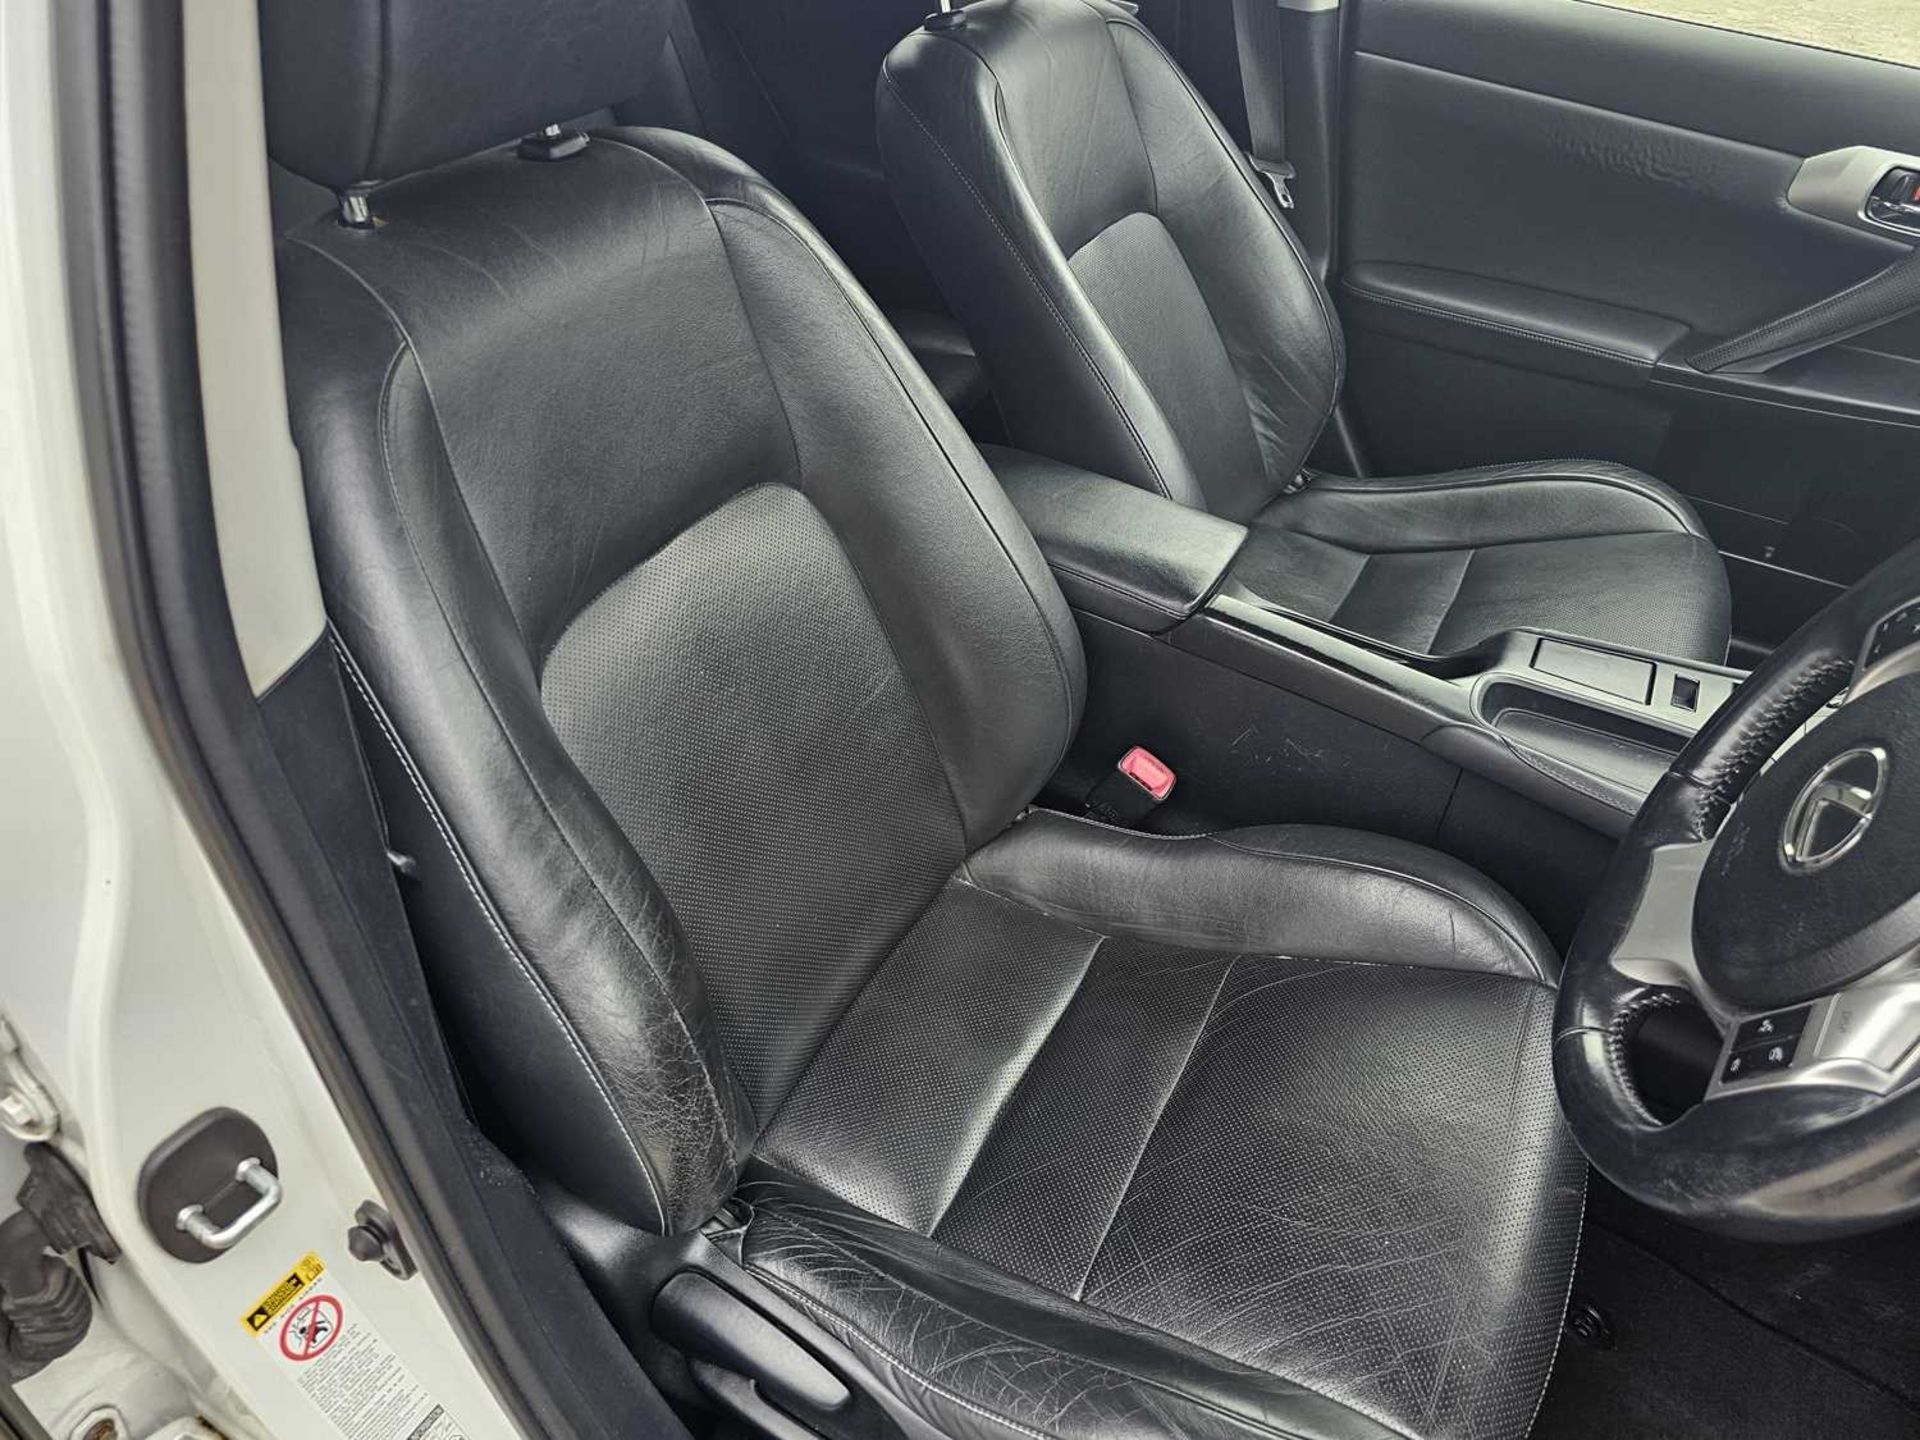 2011 Lexus CT200H Se-L Cvt Hybrid, Auto, Full Leather, Heated Seats, Bluetooth (NO VAT)(Reg. Docs. A - Image 19 of 26